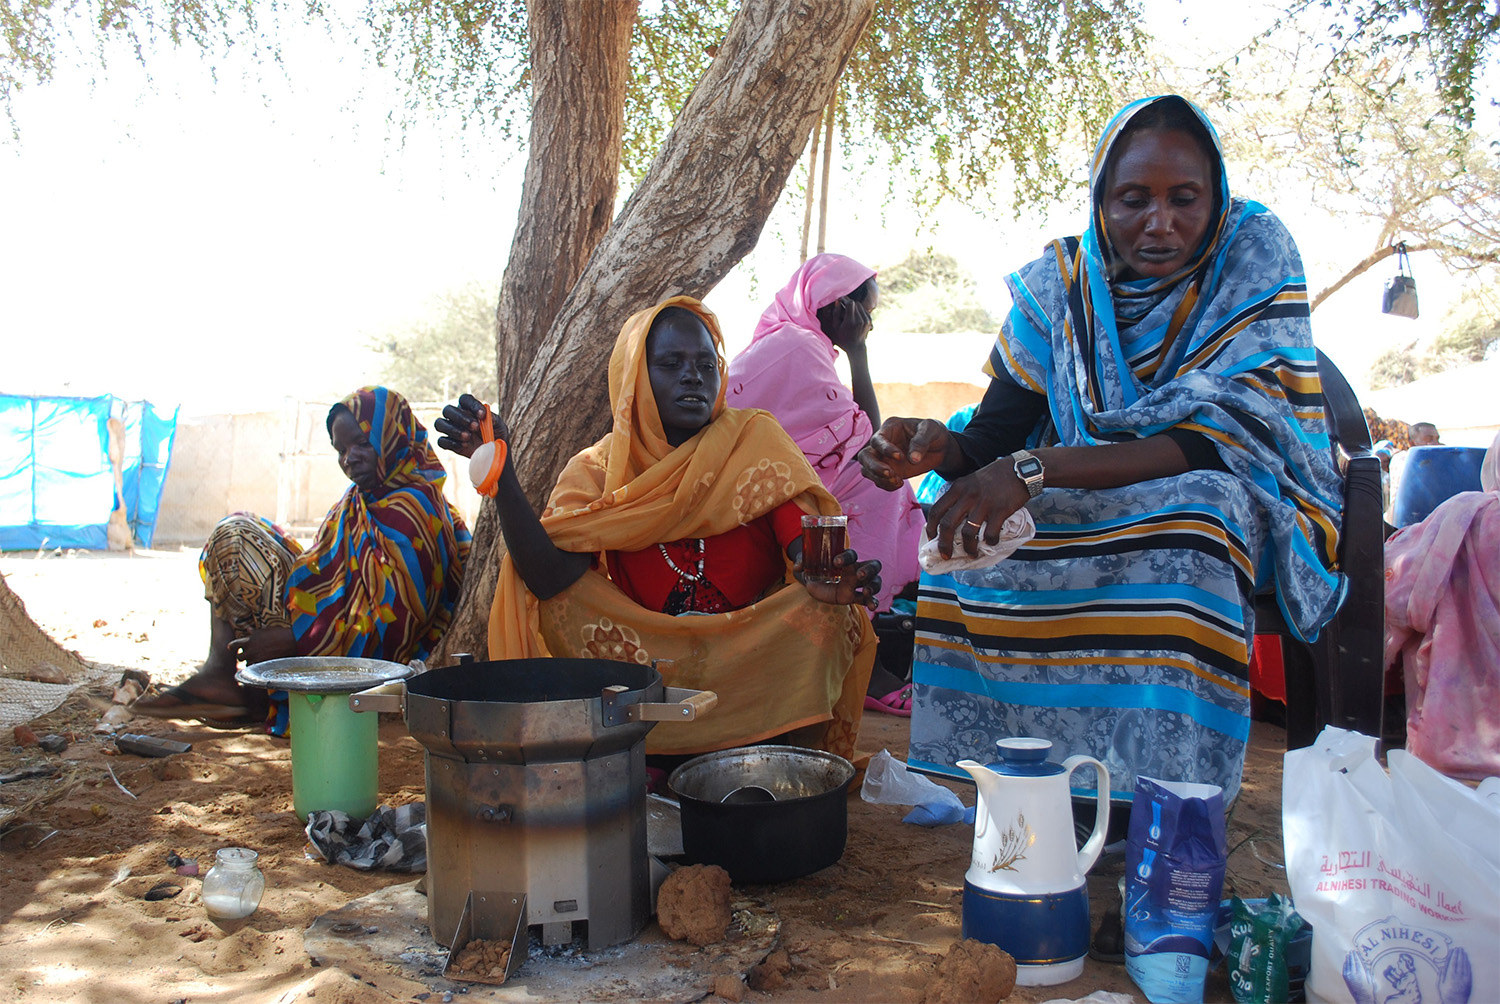  Darfur refugee women sharing tea made with the Berkeley-Darfur Stove. (Credit: Potential Energy)